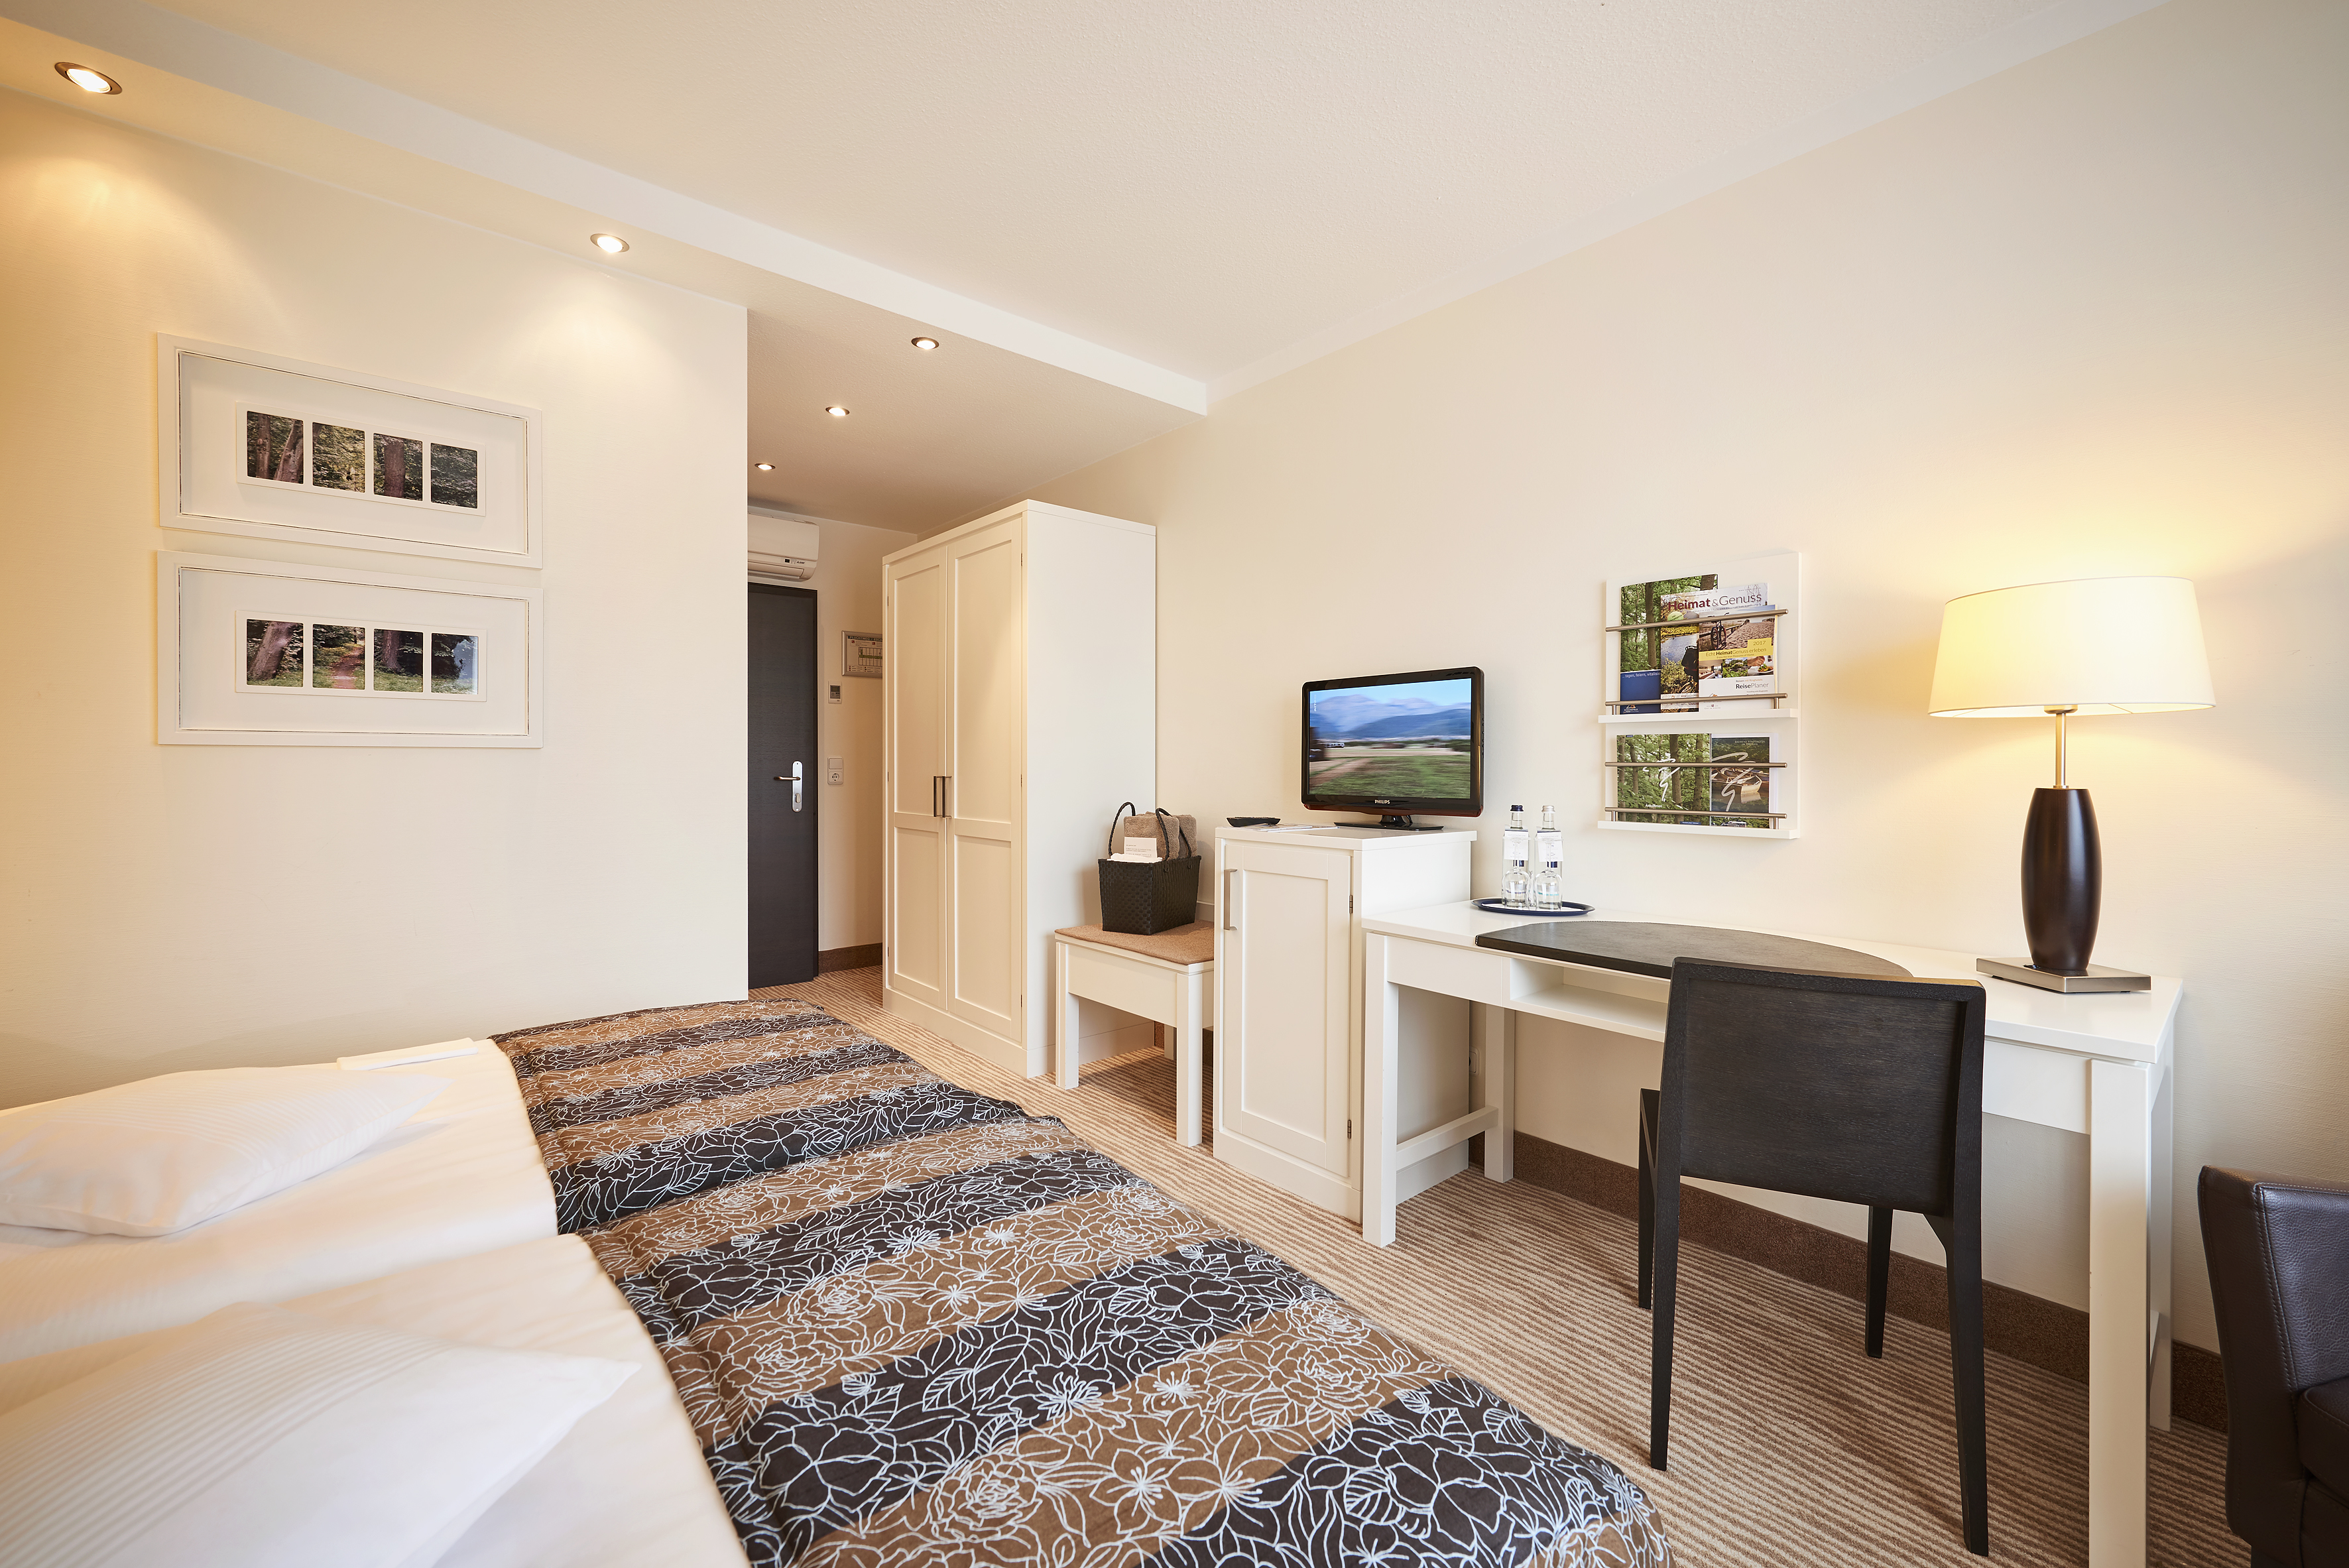 Hotel Munte - Comfort room (double)